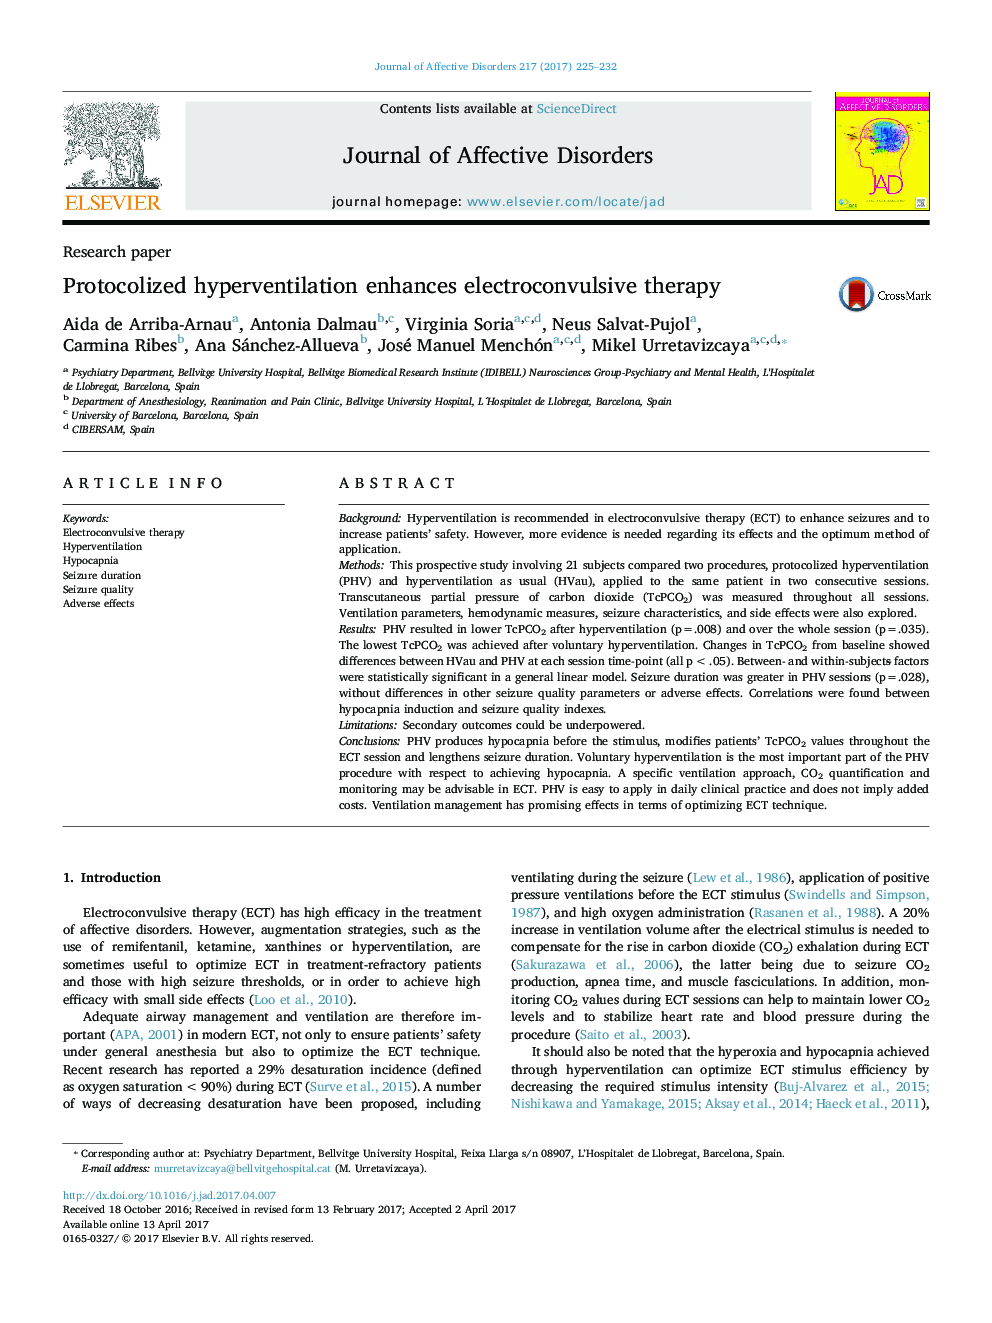 Research paperProtocolized hyperventilation enhances electroconvulsive therapy